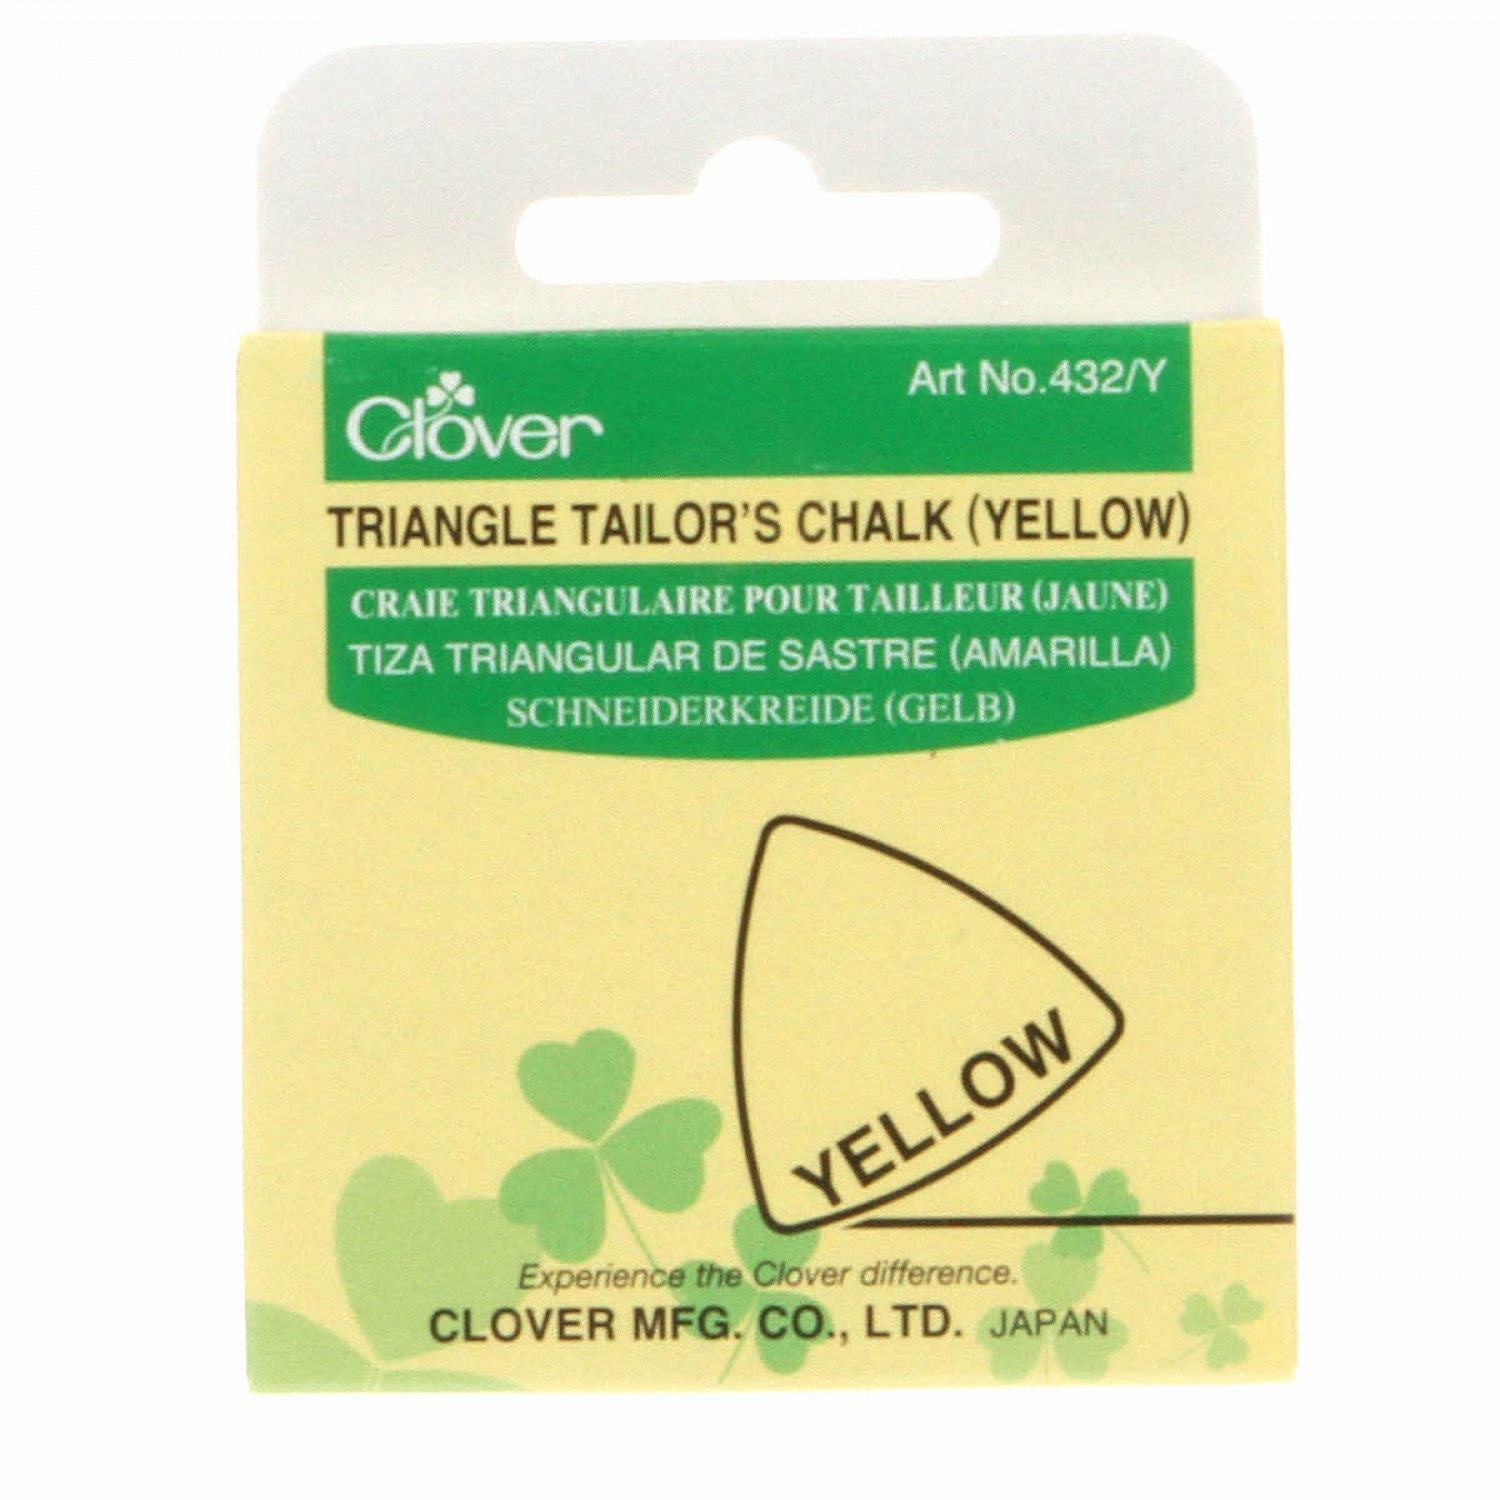 Triangle Tailors Chalk Yellow - Juki Junkies